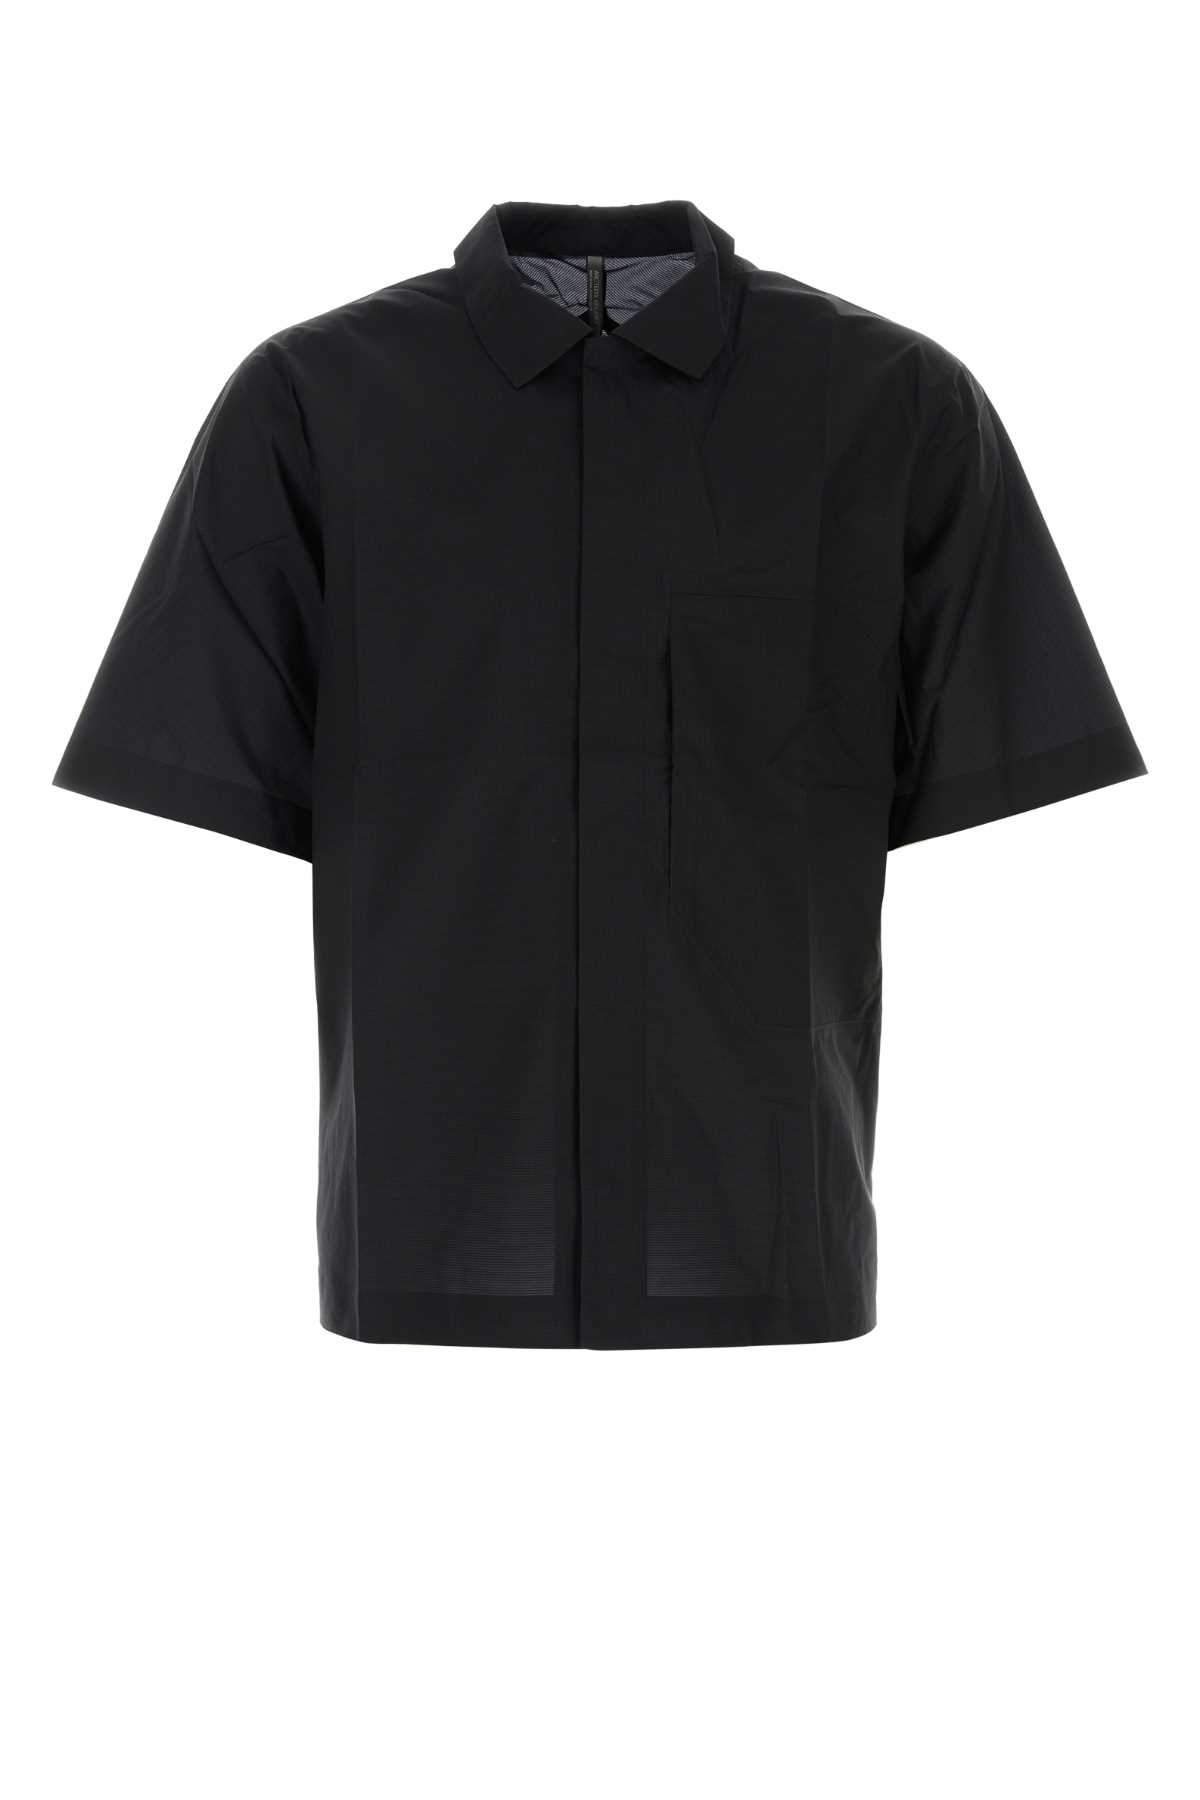 Arc'teryx Black Nylon Demlo Shirt